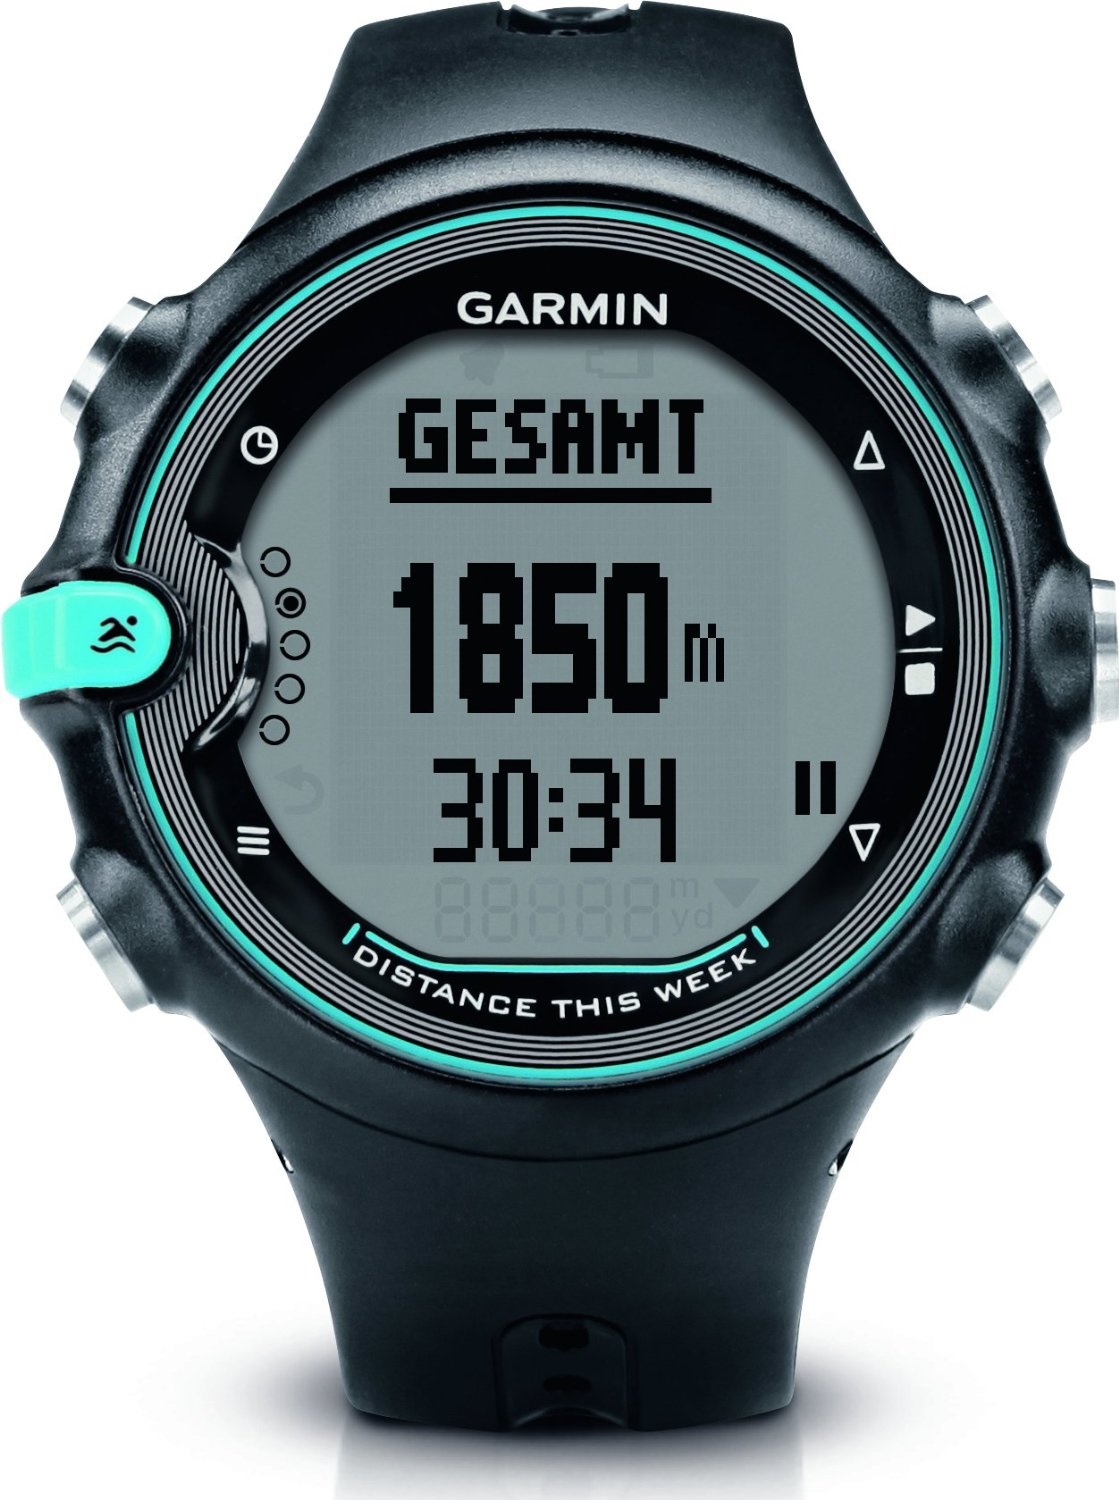 Garmin Swim Watch with Garmin Connect - Worldwide